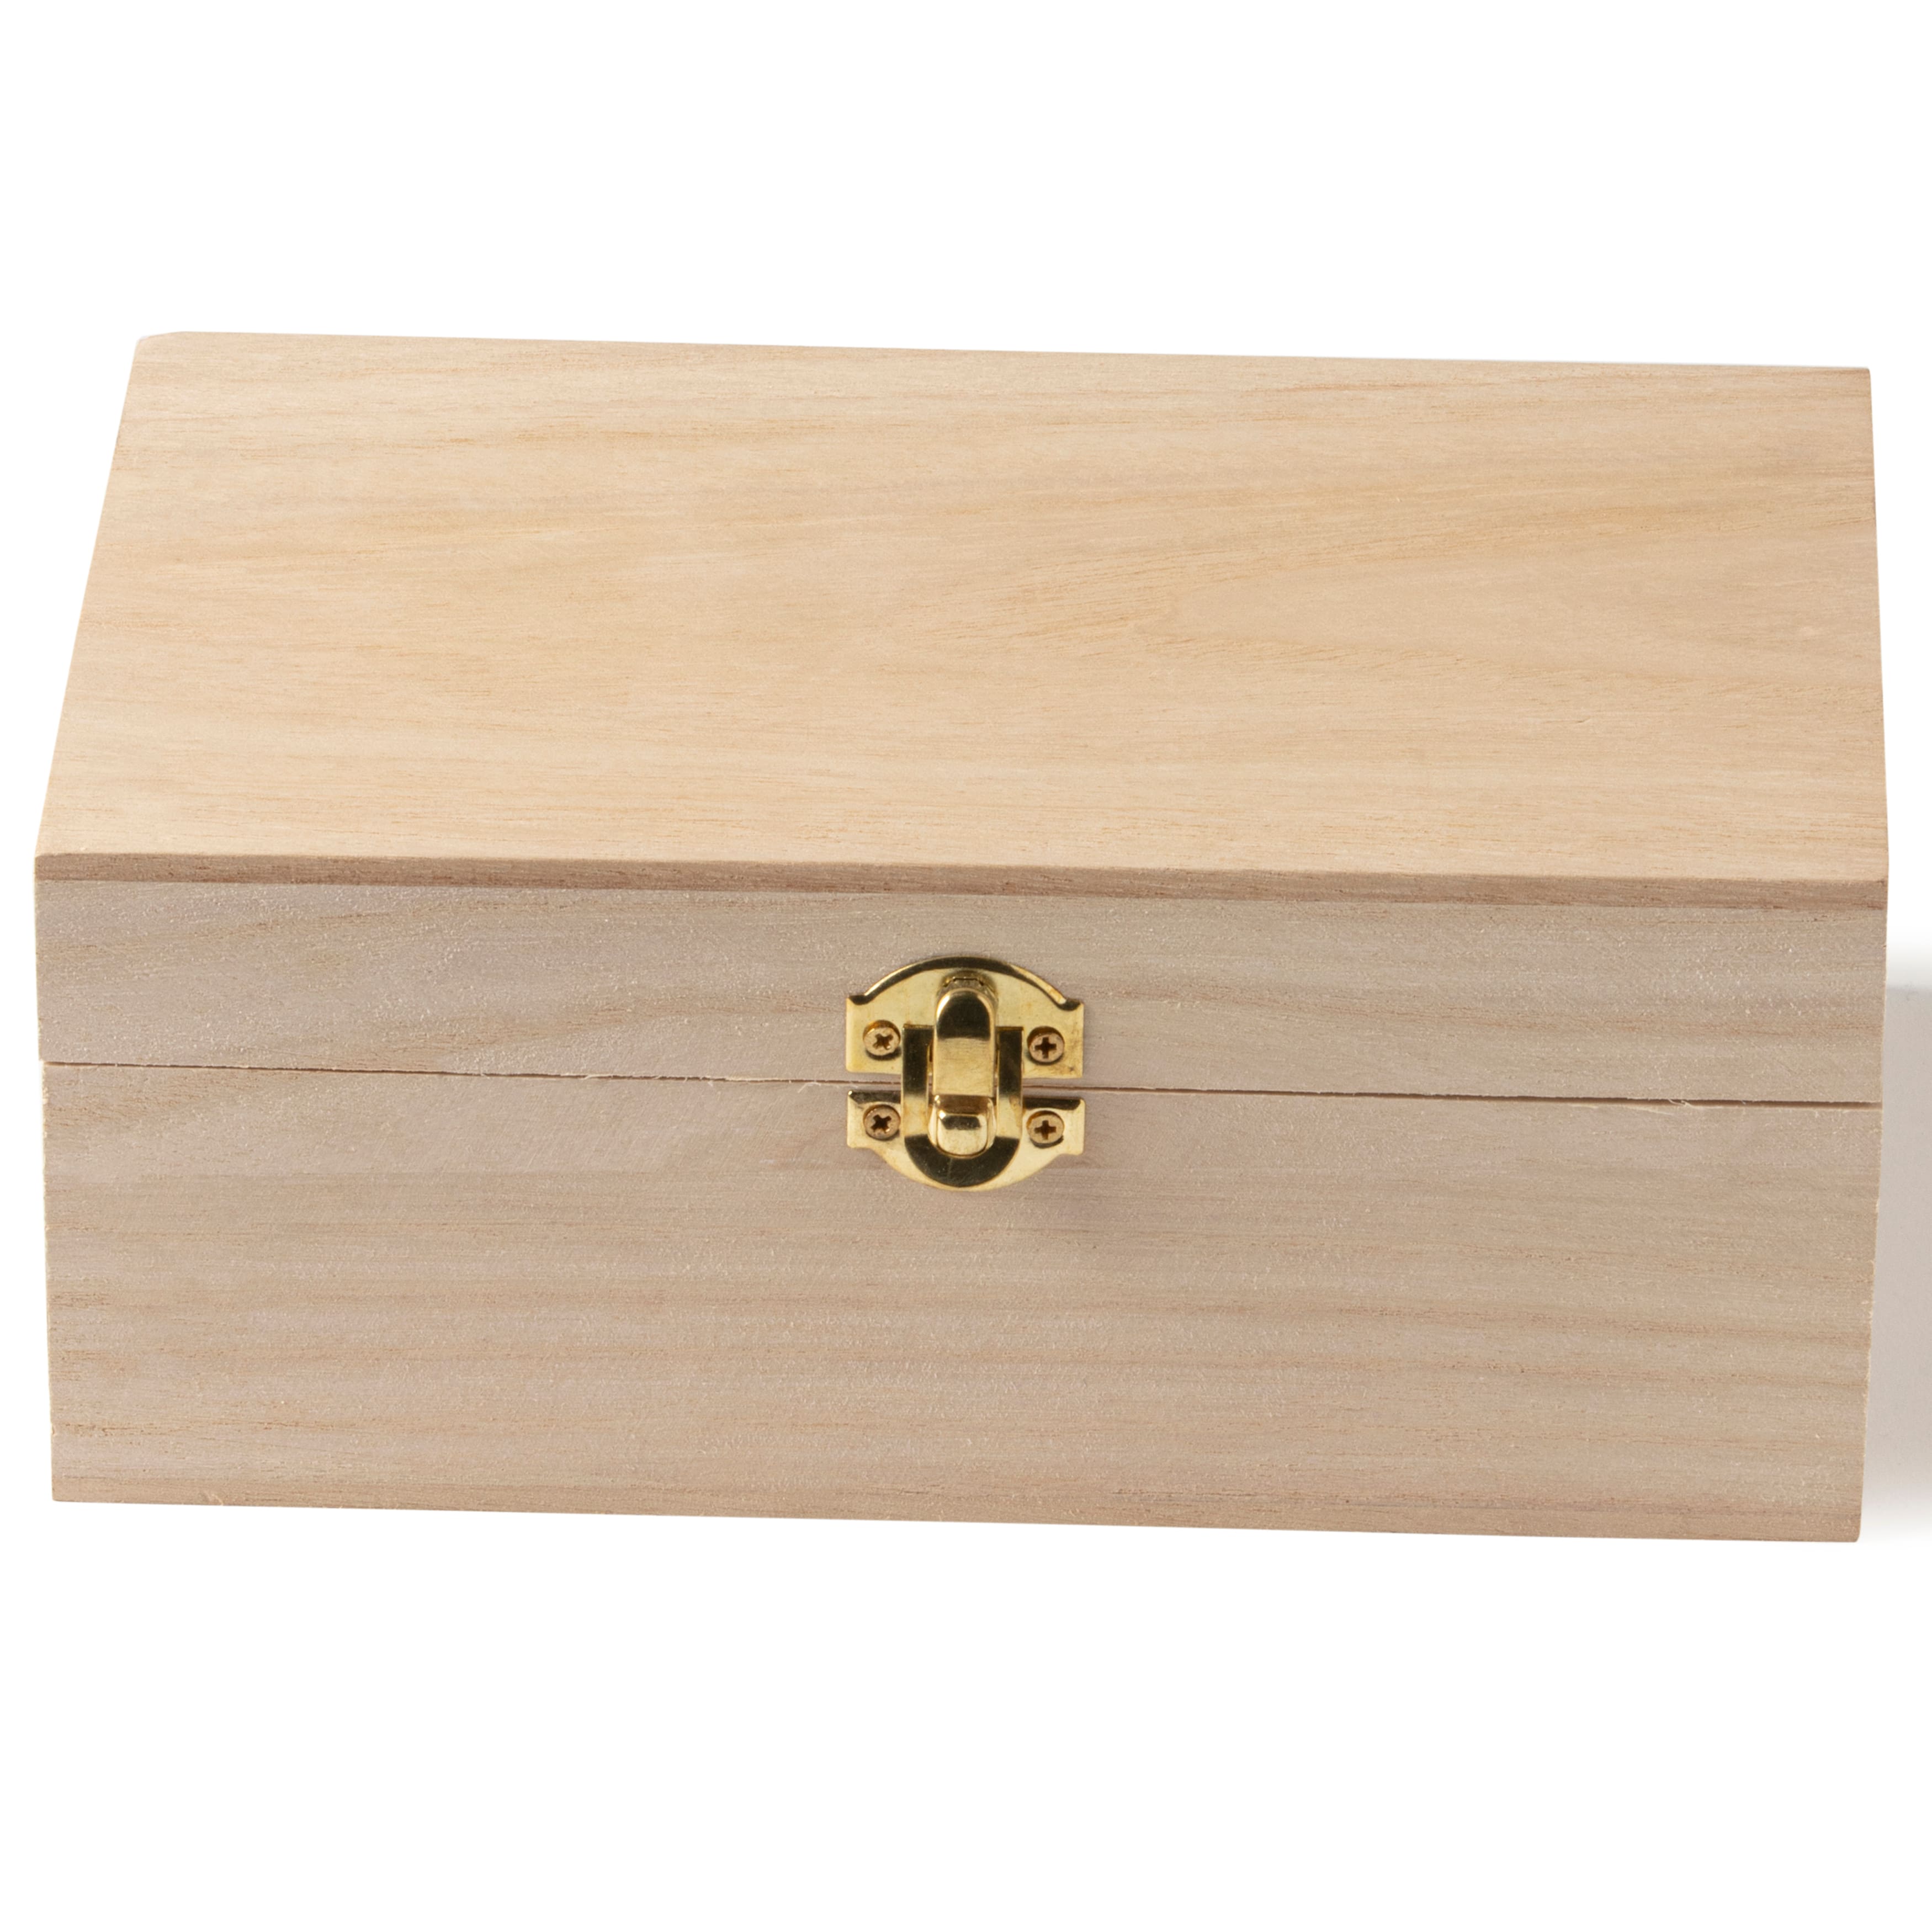 Unpainted New Wooden Saving Money Box Art Craft Decoupage Wooden Money Box 